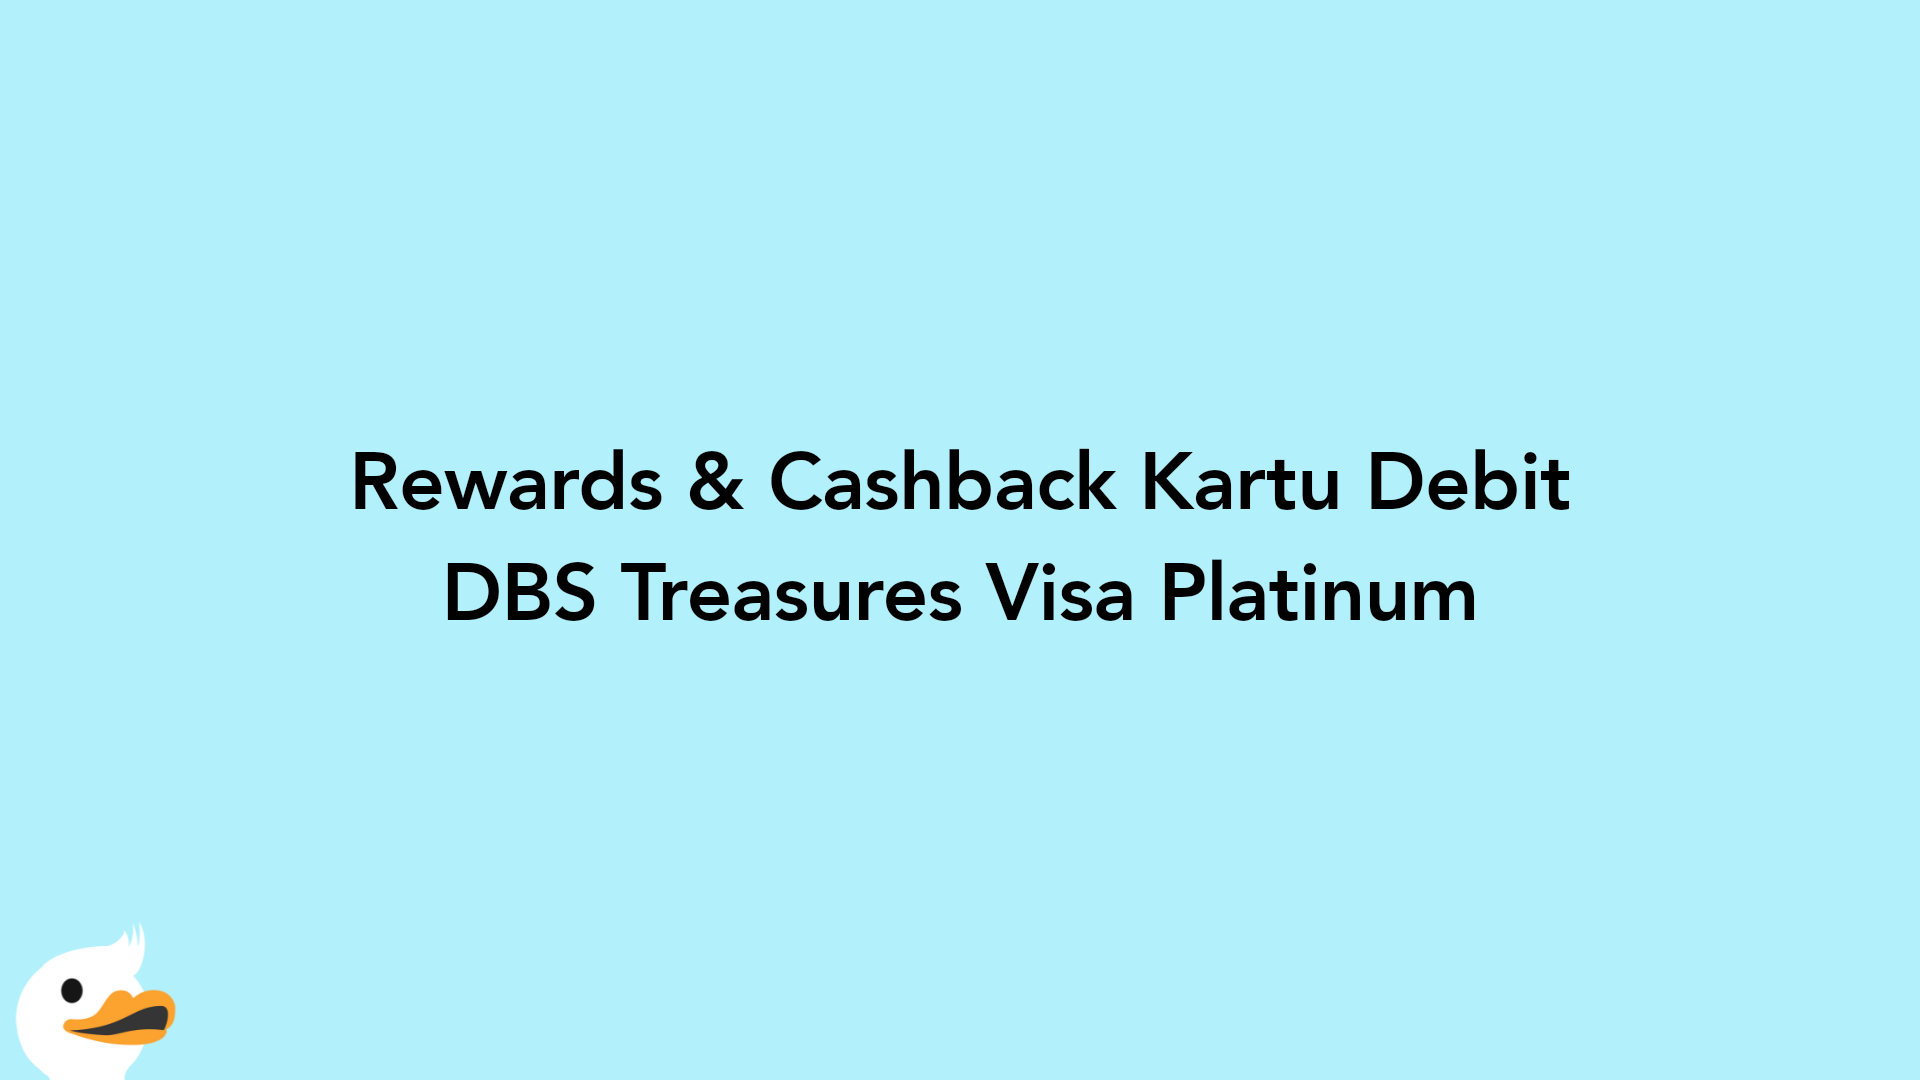 Rewards & Cashback Kartu Debit DBS Treasures Visa Platinum